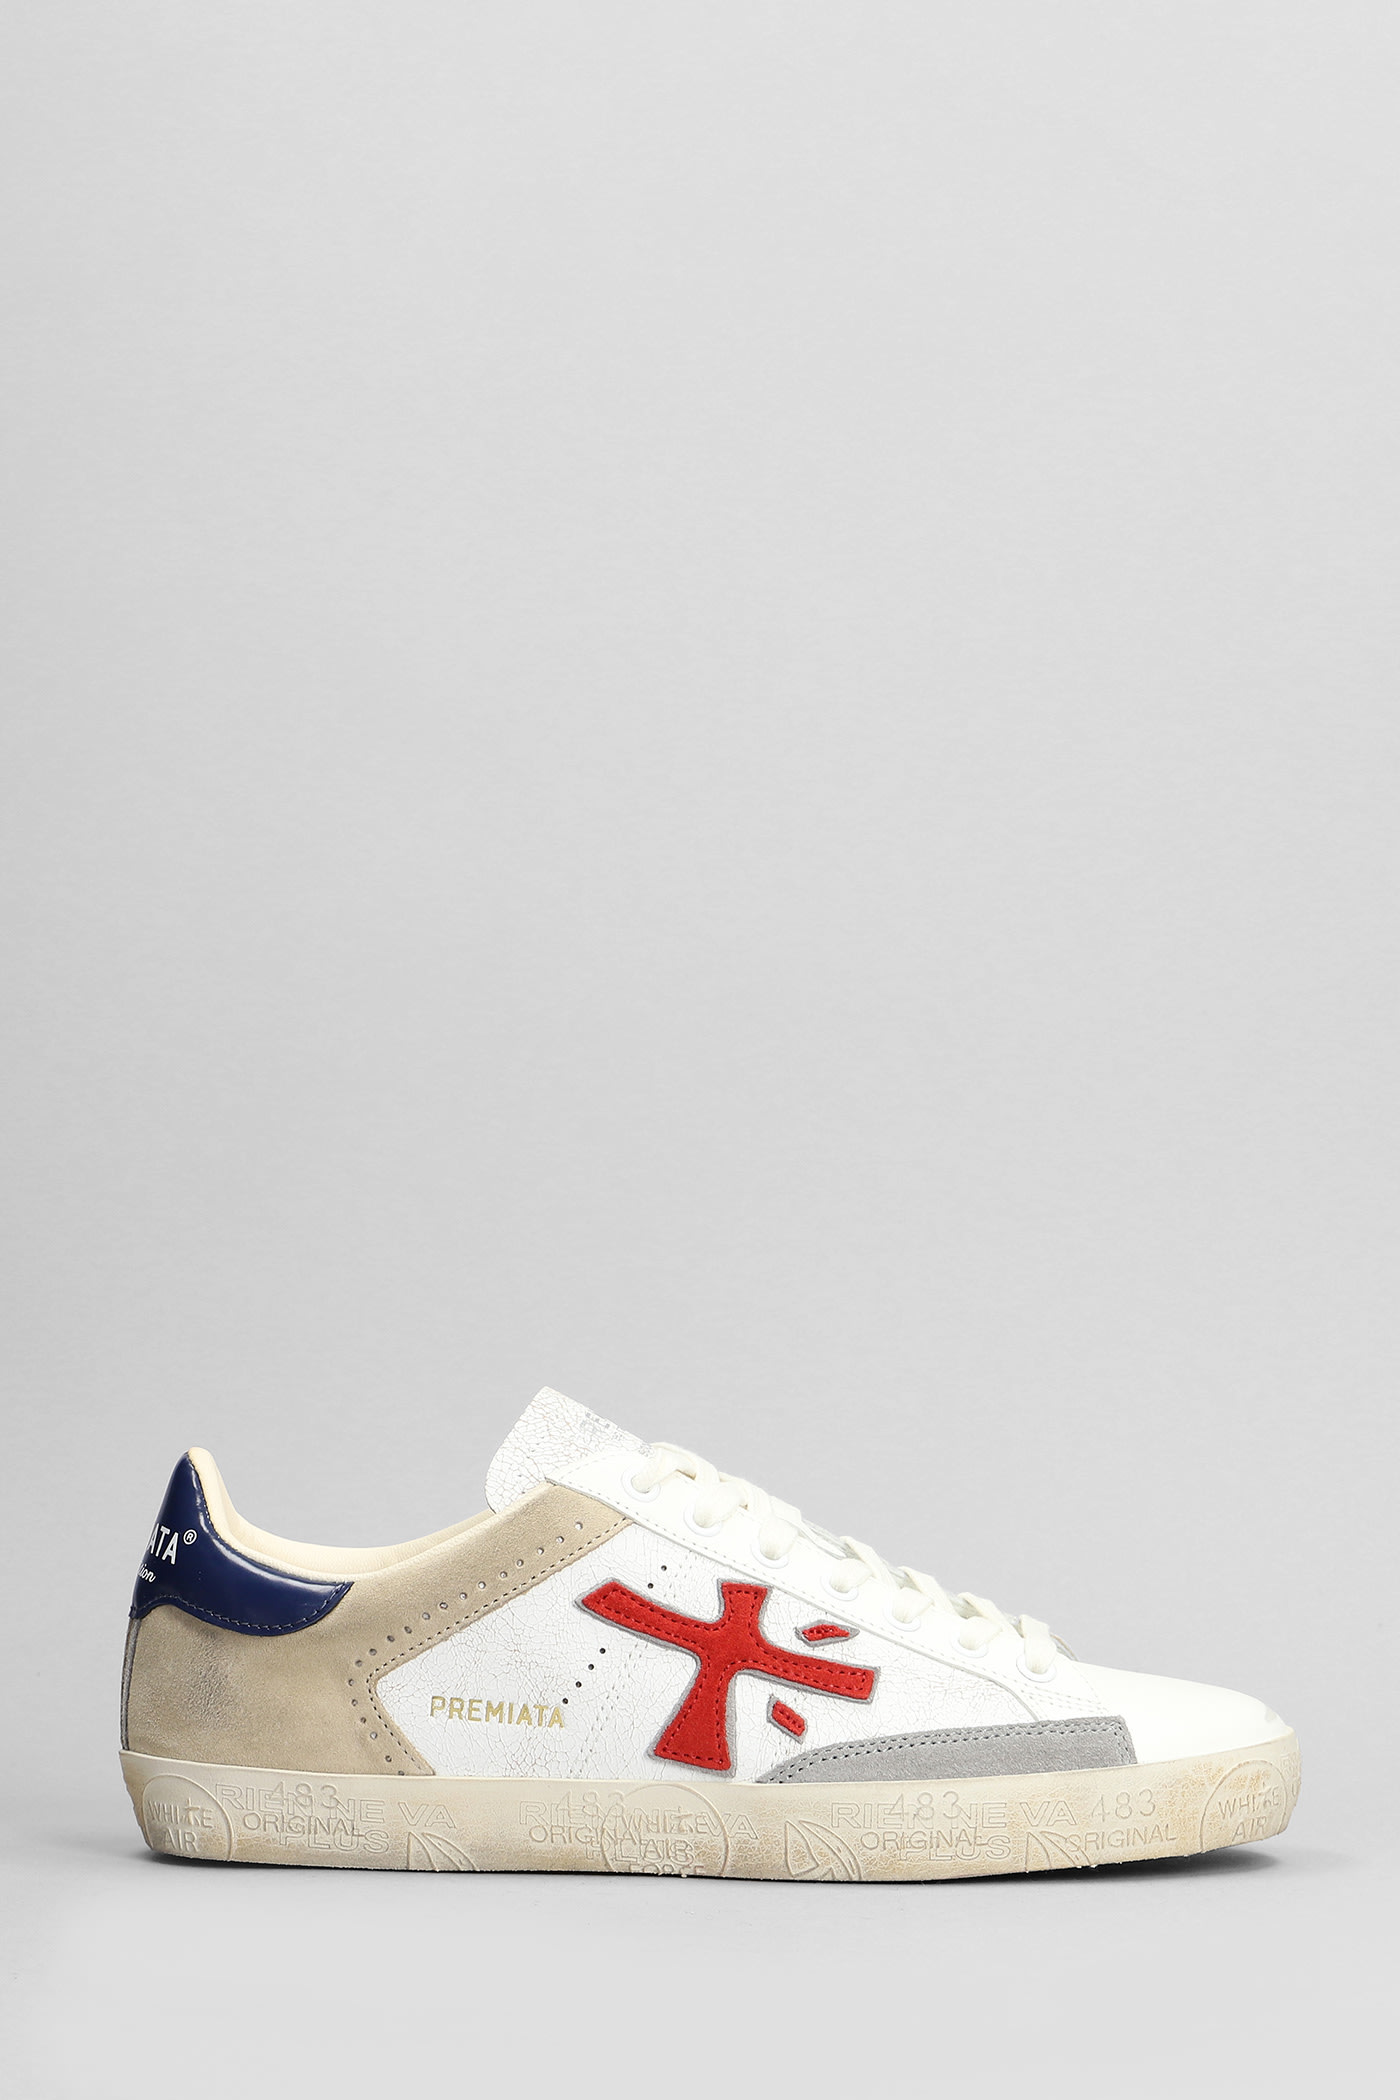 Premiata Steven Sneakers In White Suede And Leather In Multicolor